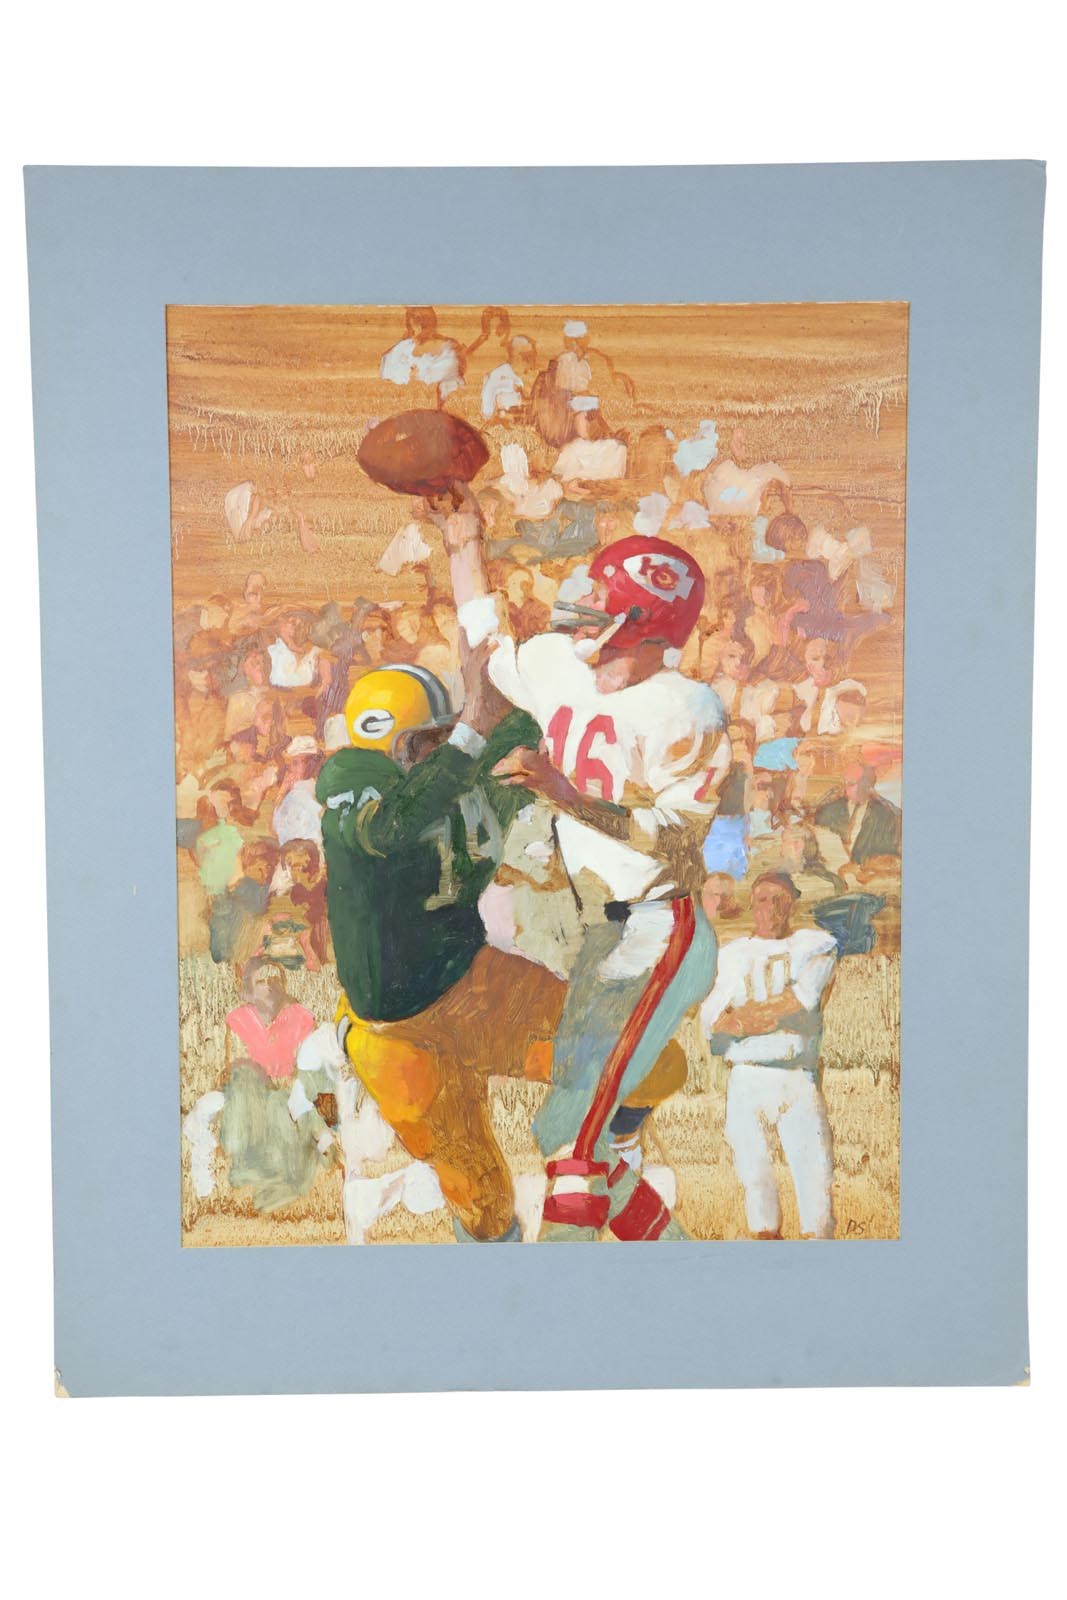 1967 Super Bowl Green Bay Packers v KC Chiefs Original Artwork by Daniel Schwartz - Published in Super Bowl IX Program